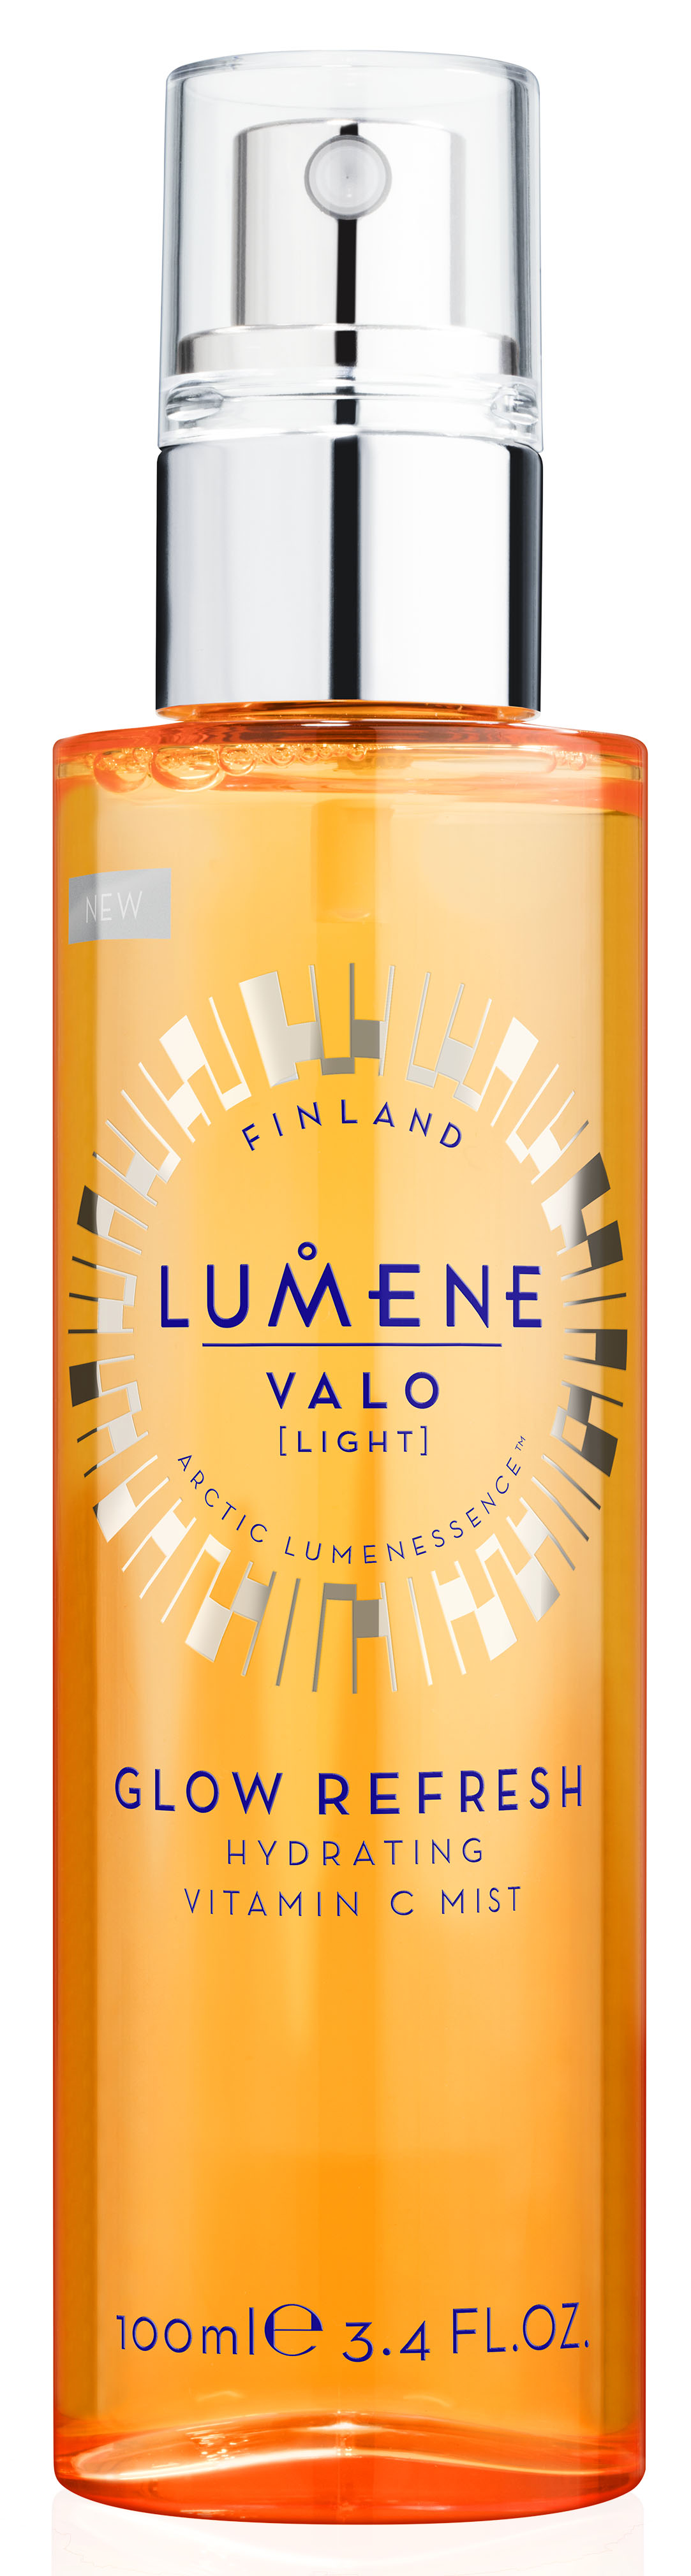 Lumene Valo Увлажняющая освежающая дымка для лица Vitamin C, 100 мл